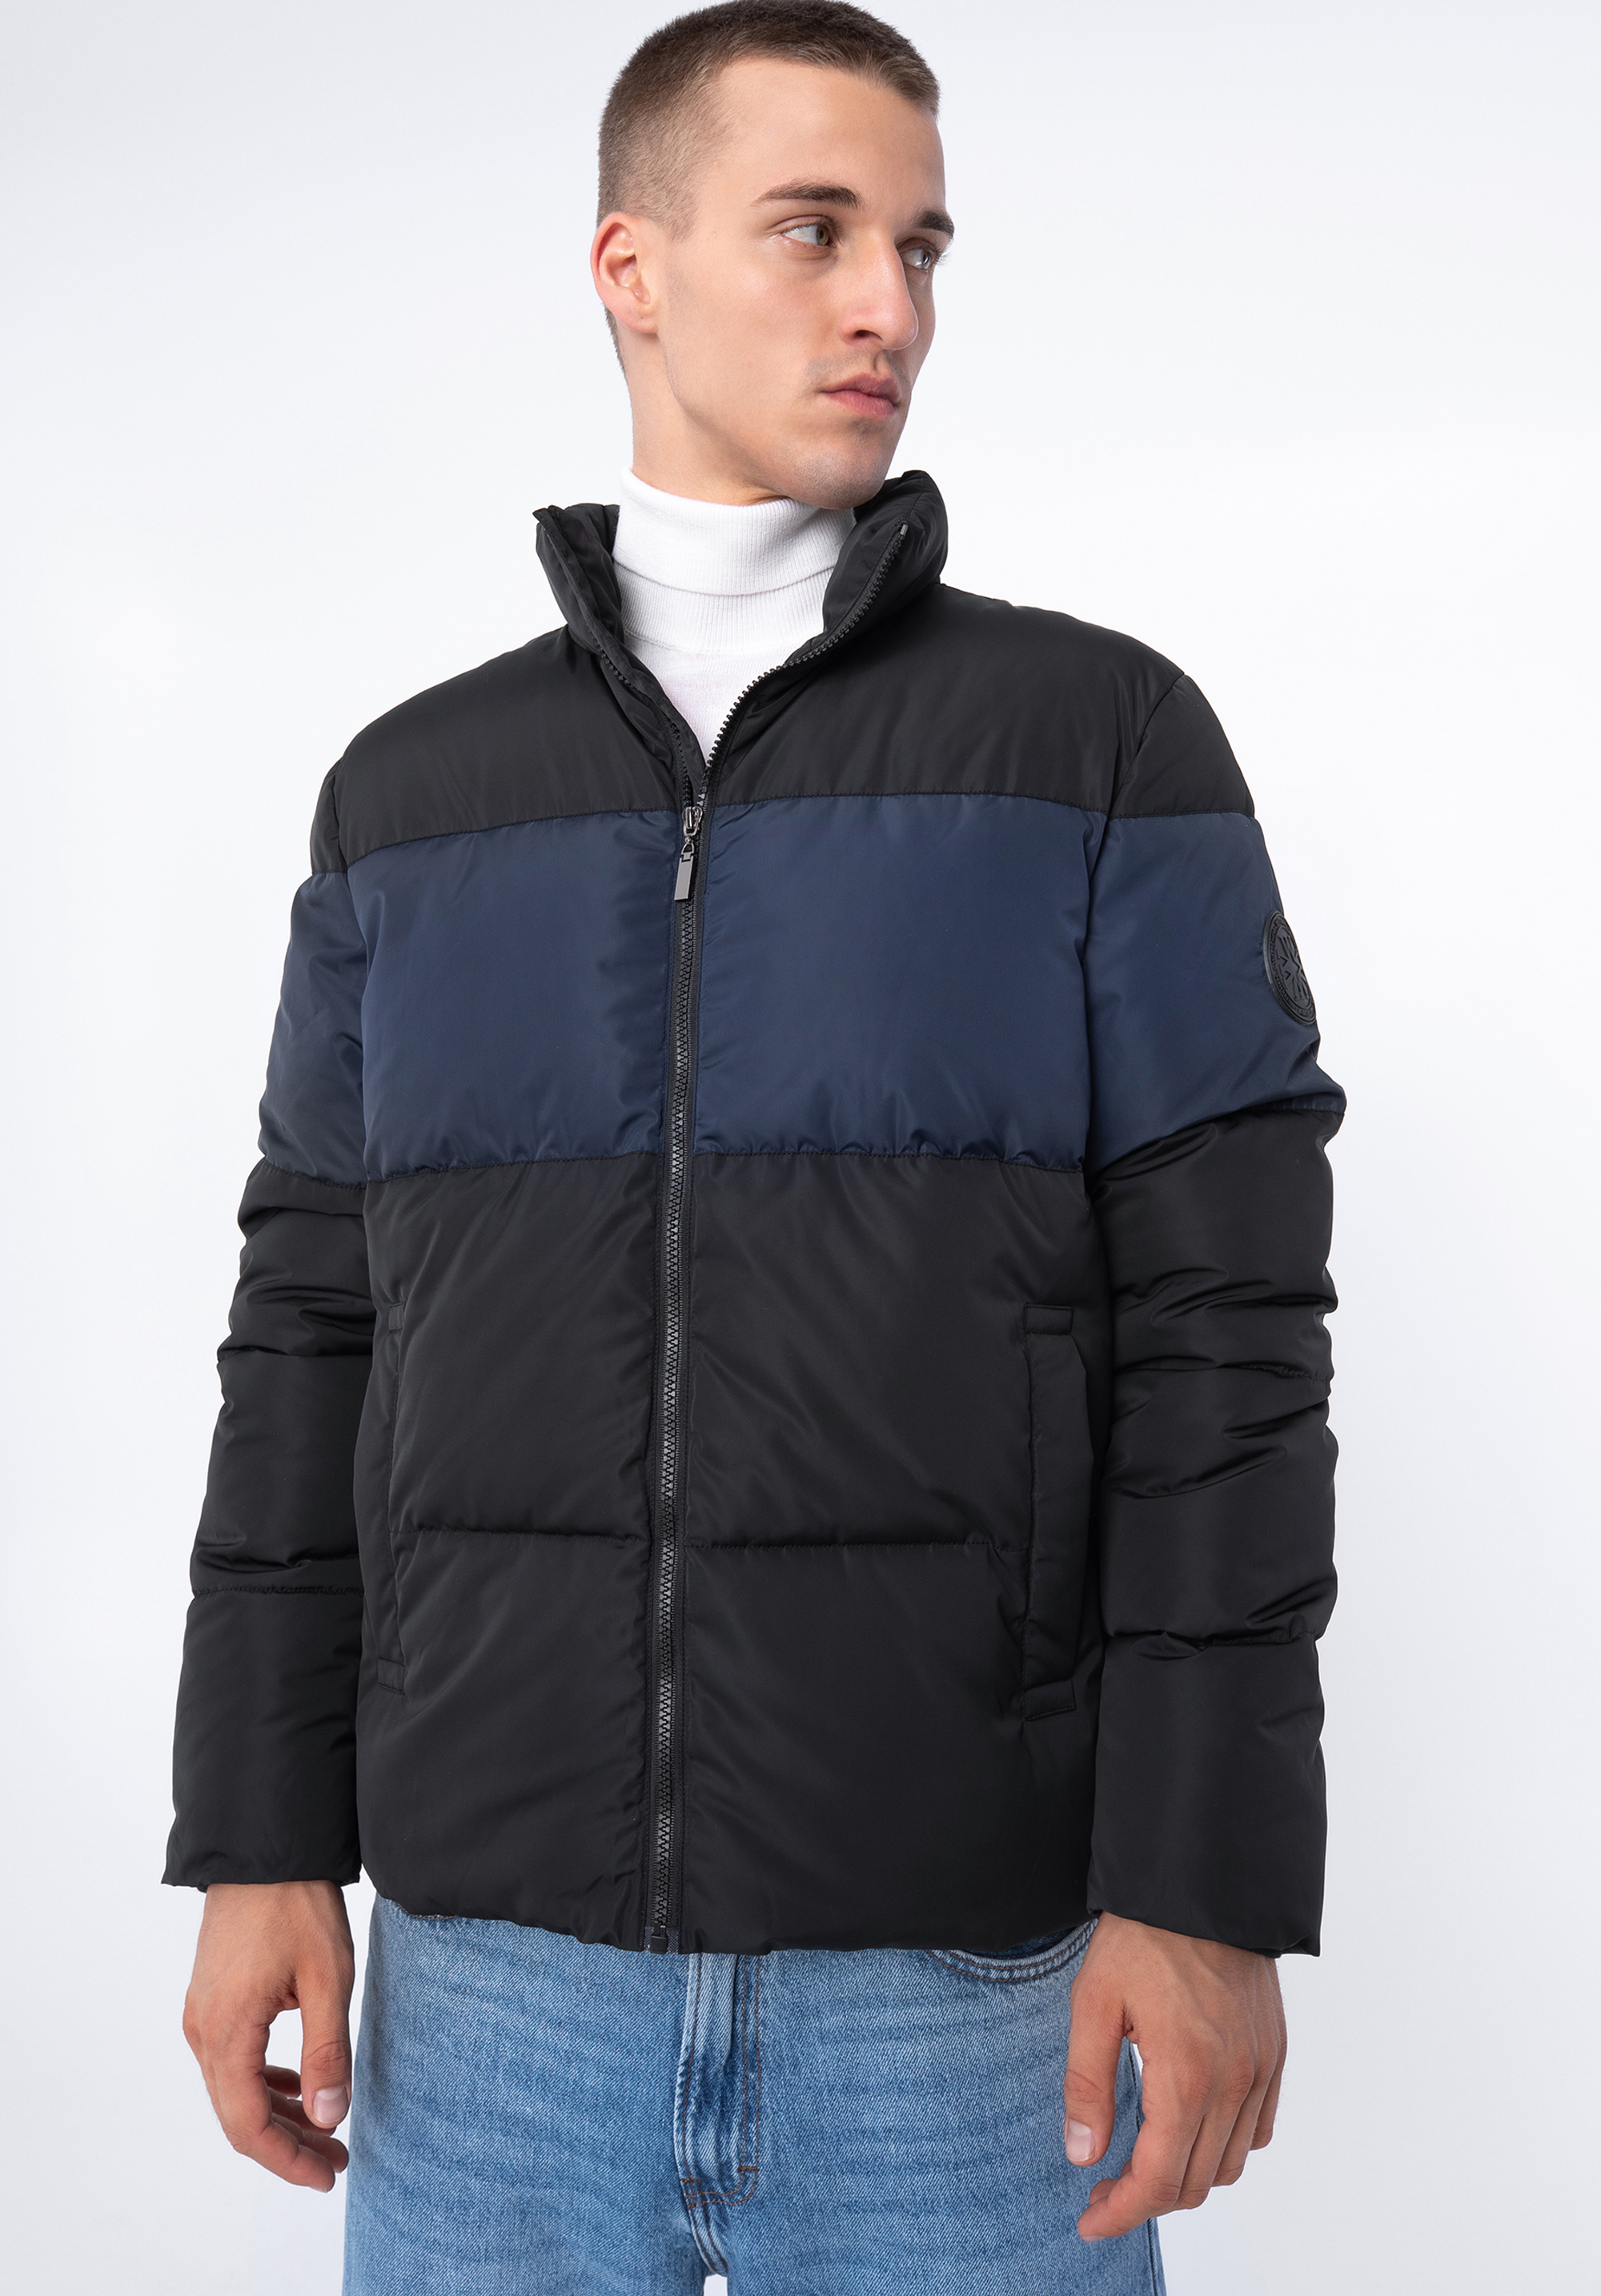 Кожаная куртка Wittchen Polyester jacket, разноцветный